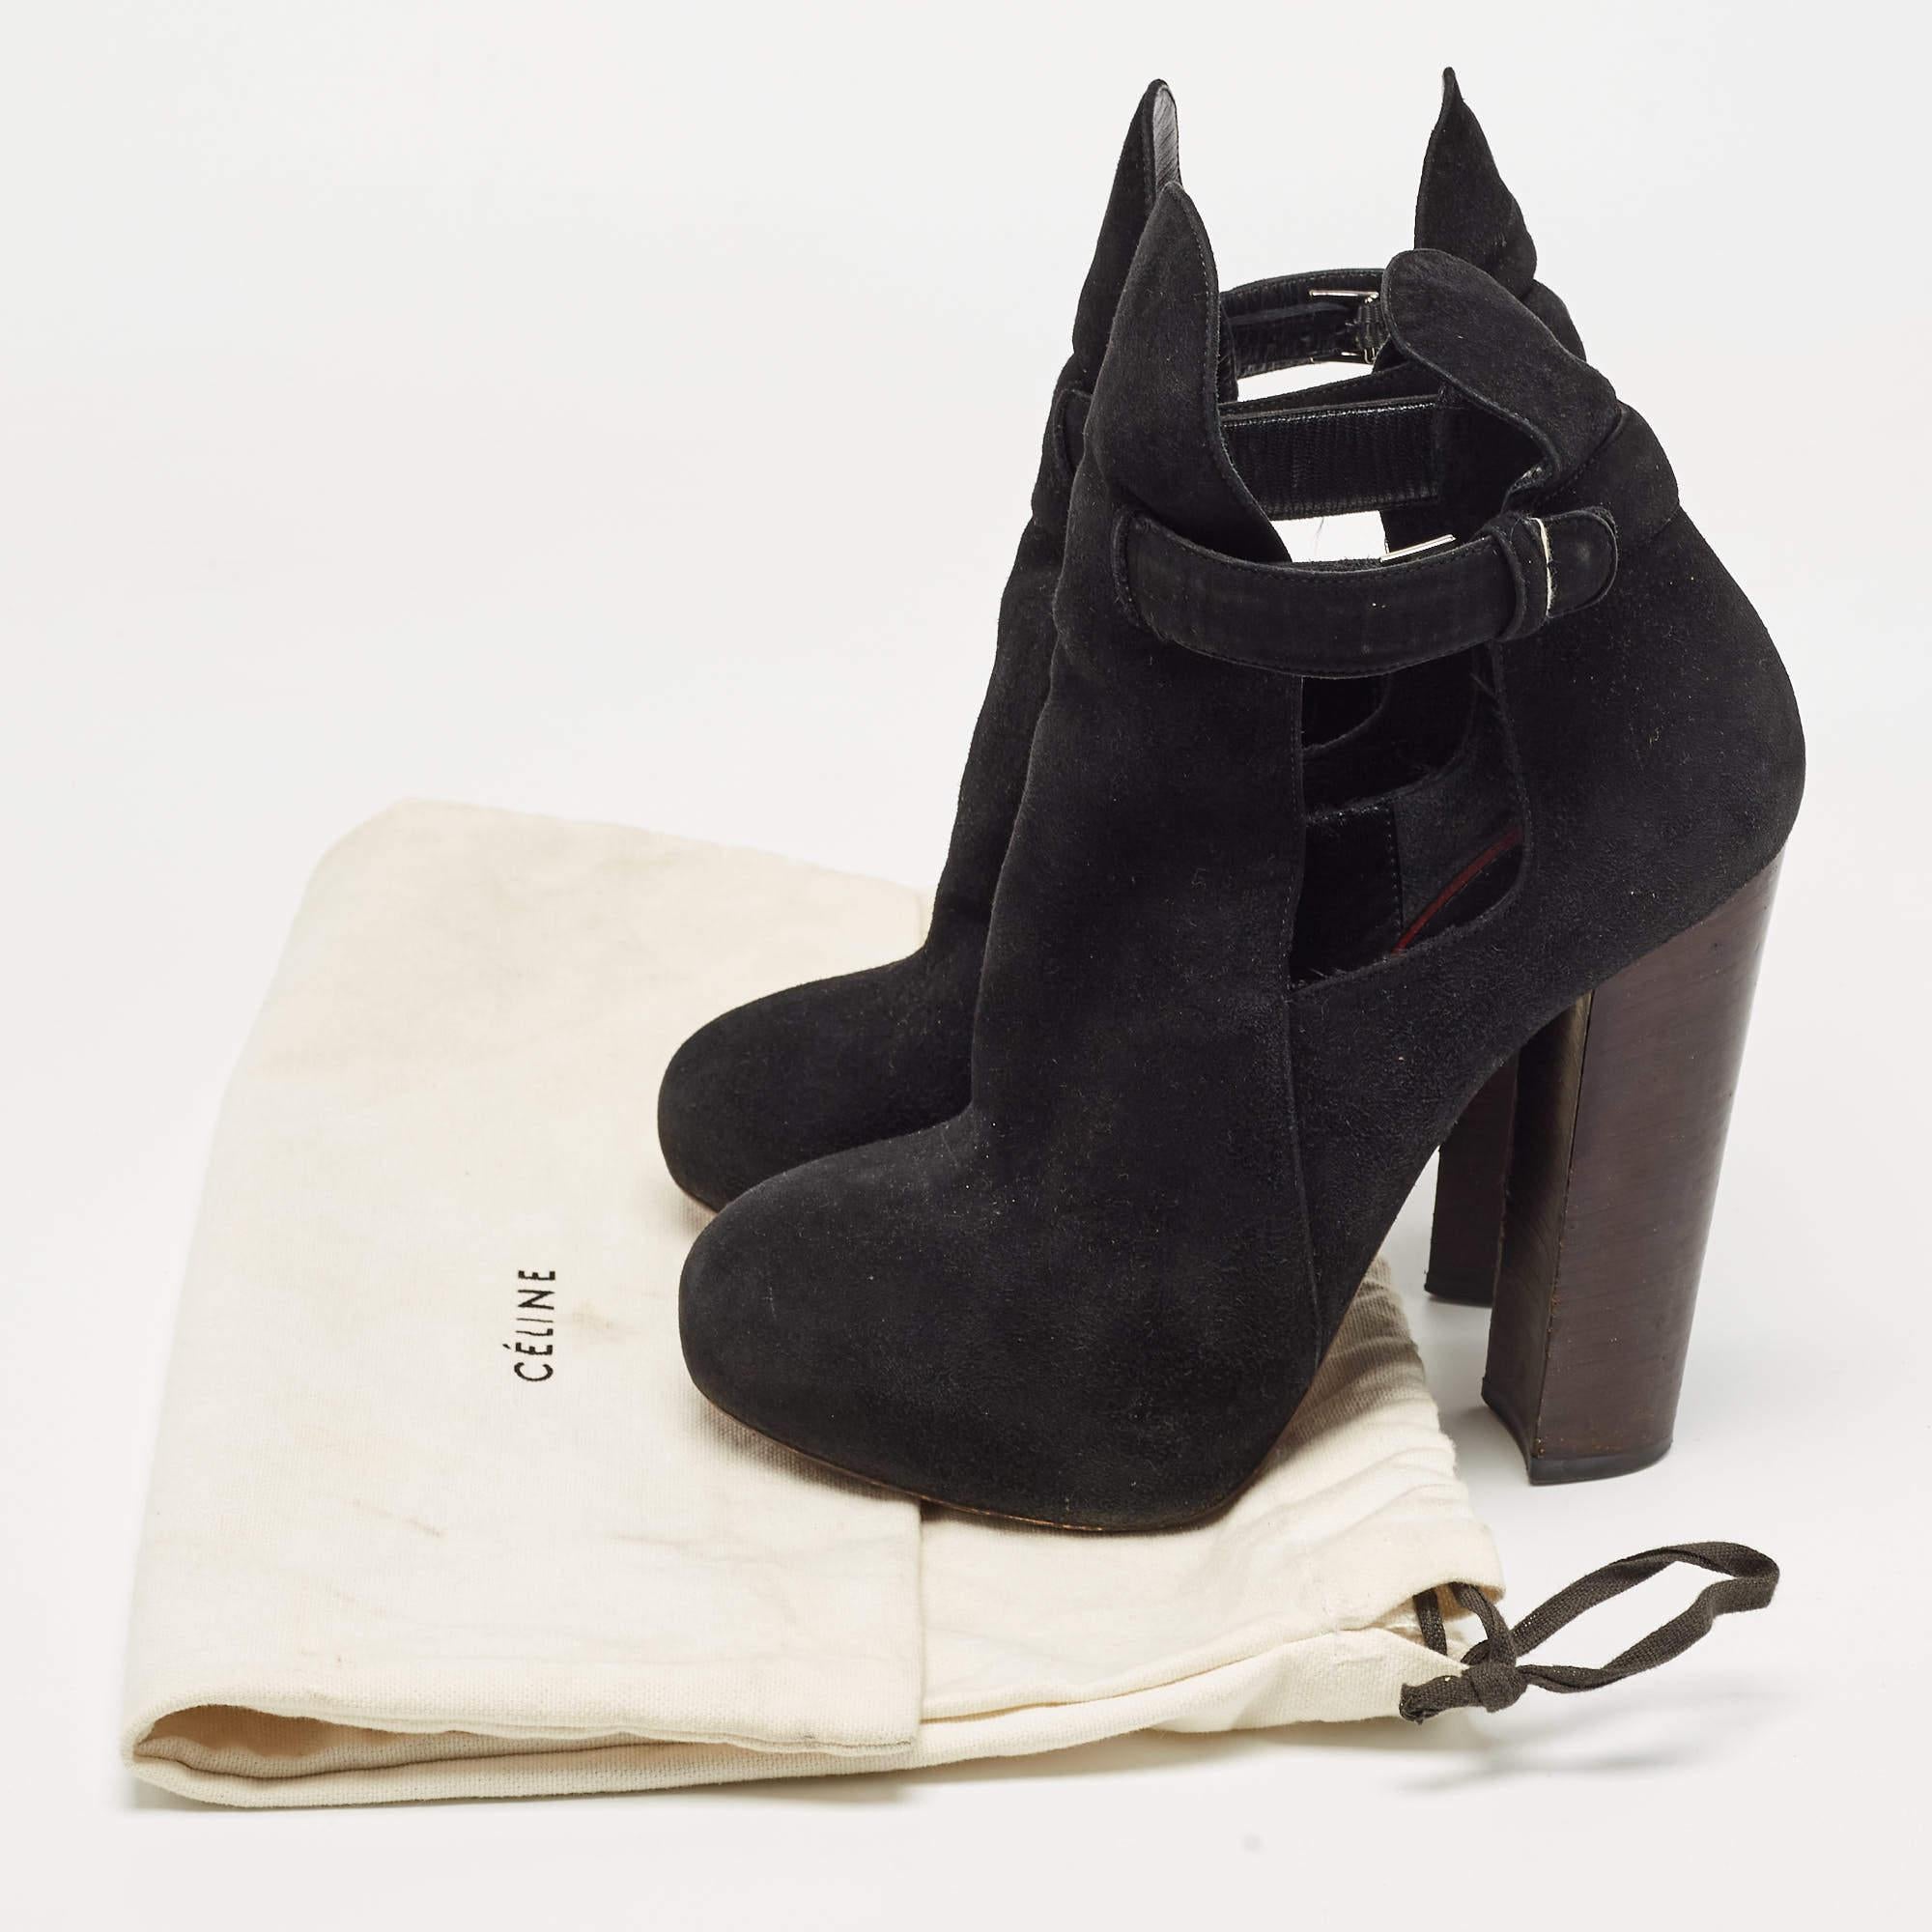 Celine Black Suede Platform Block Heel Ankle Booties Size 37 For Sale 6